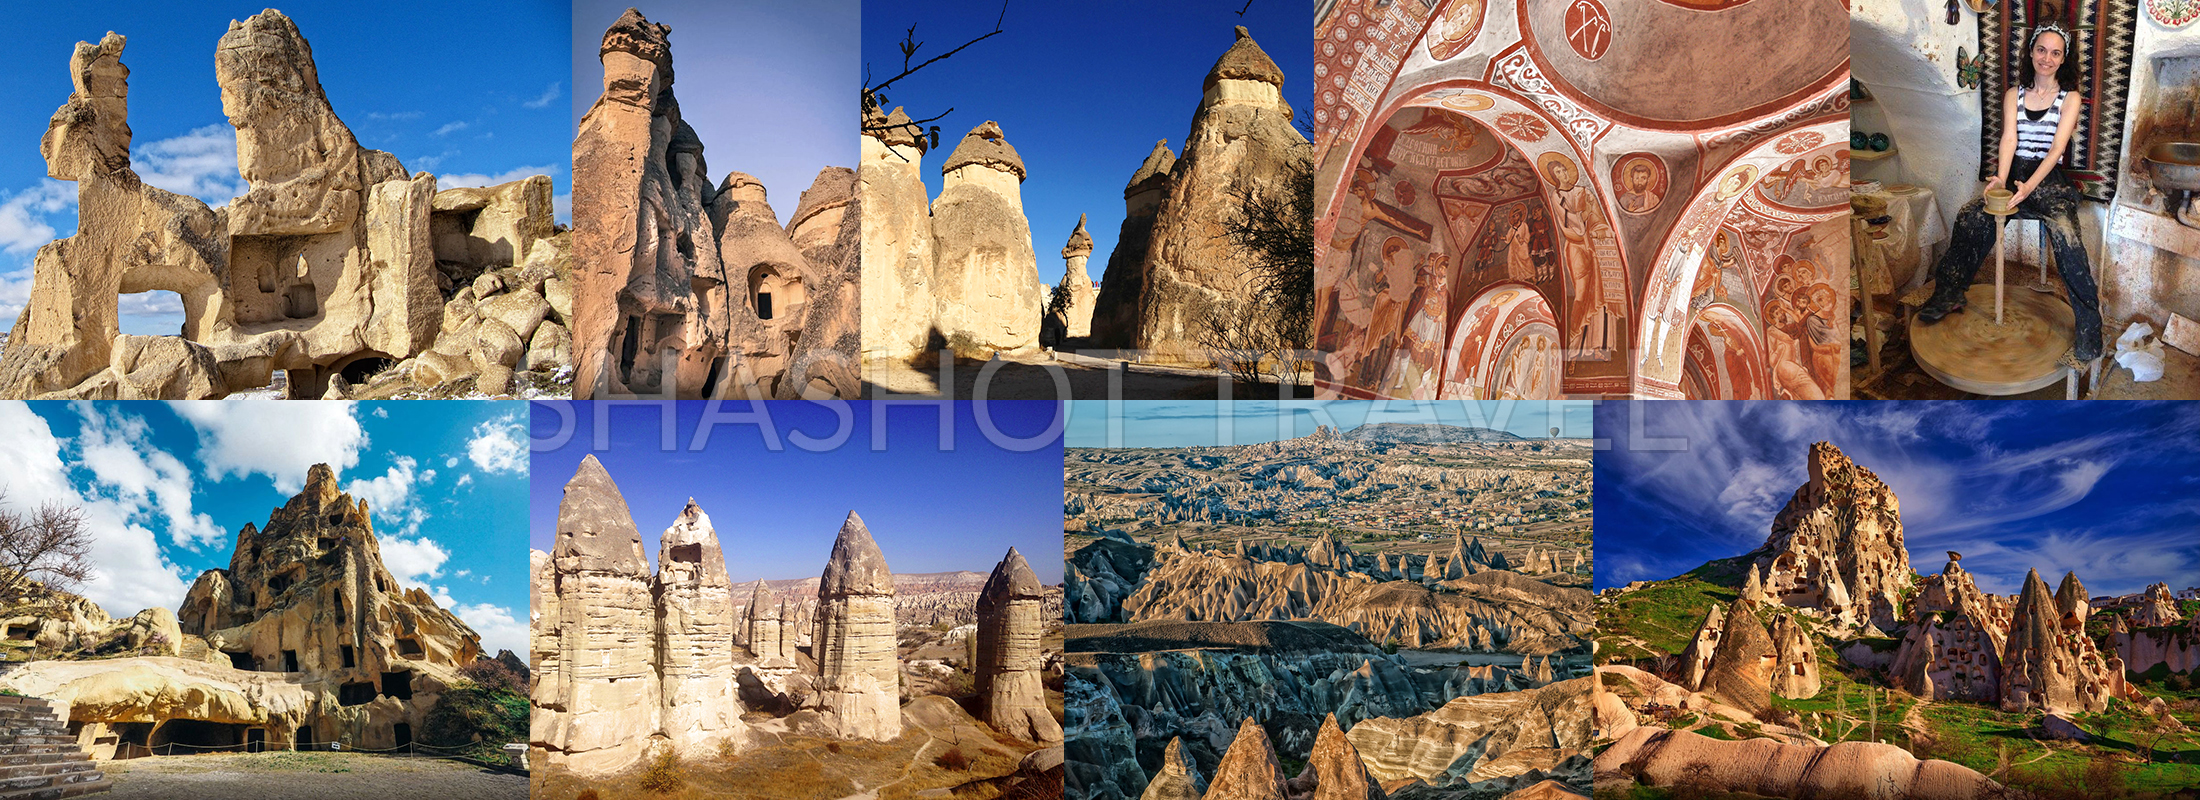 cappadocia-turkey-turkiye-shashot-travel-red-tour